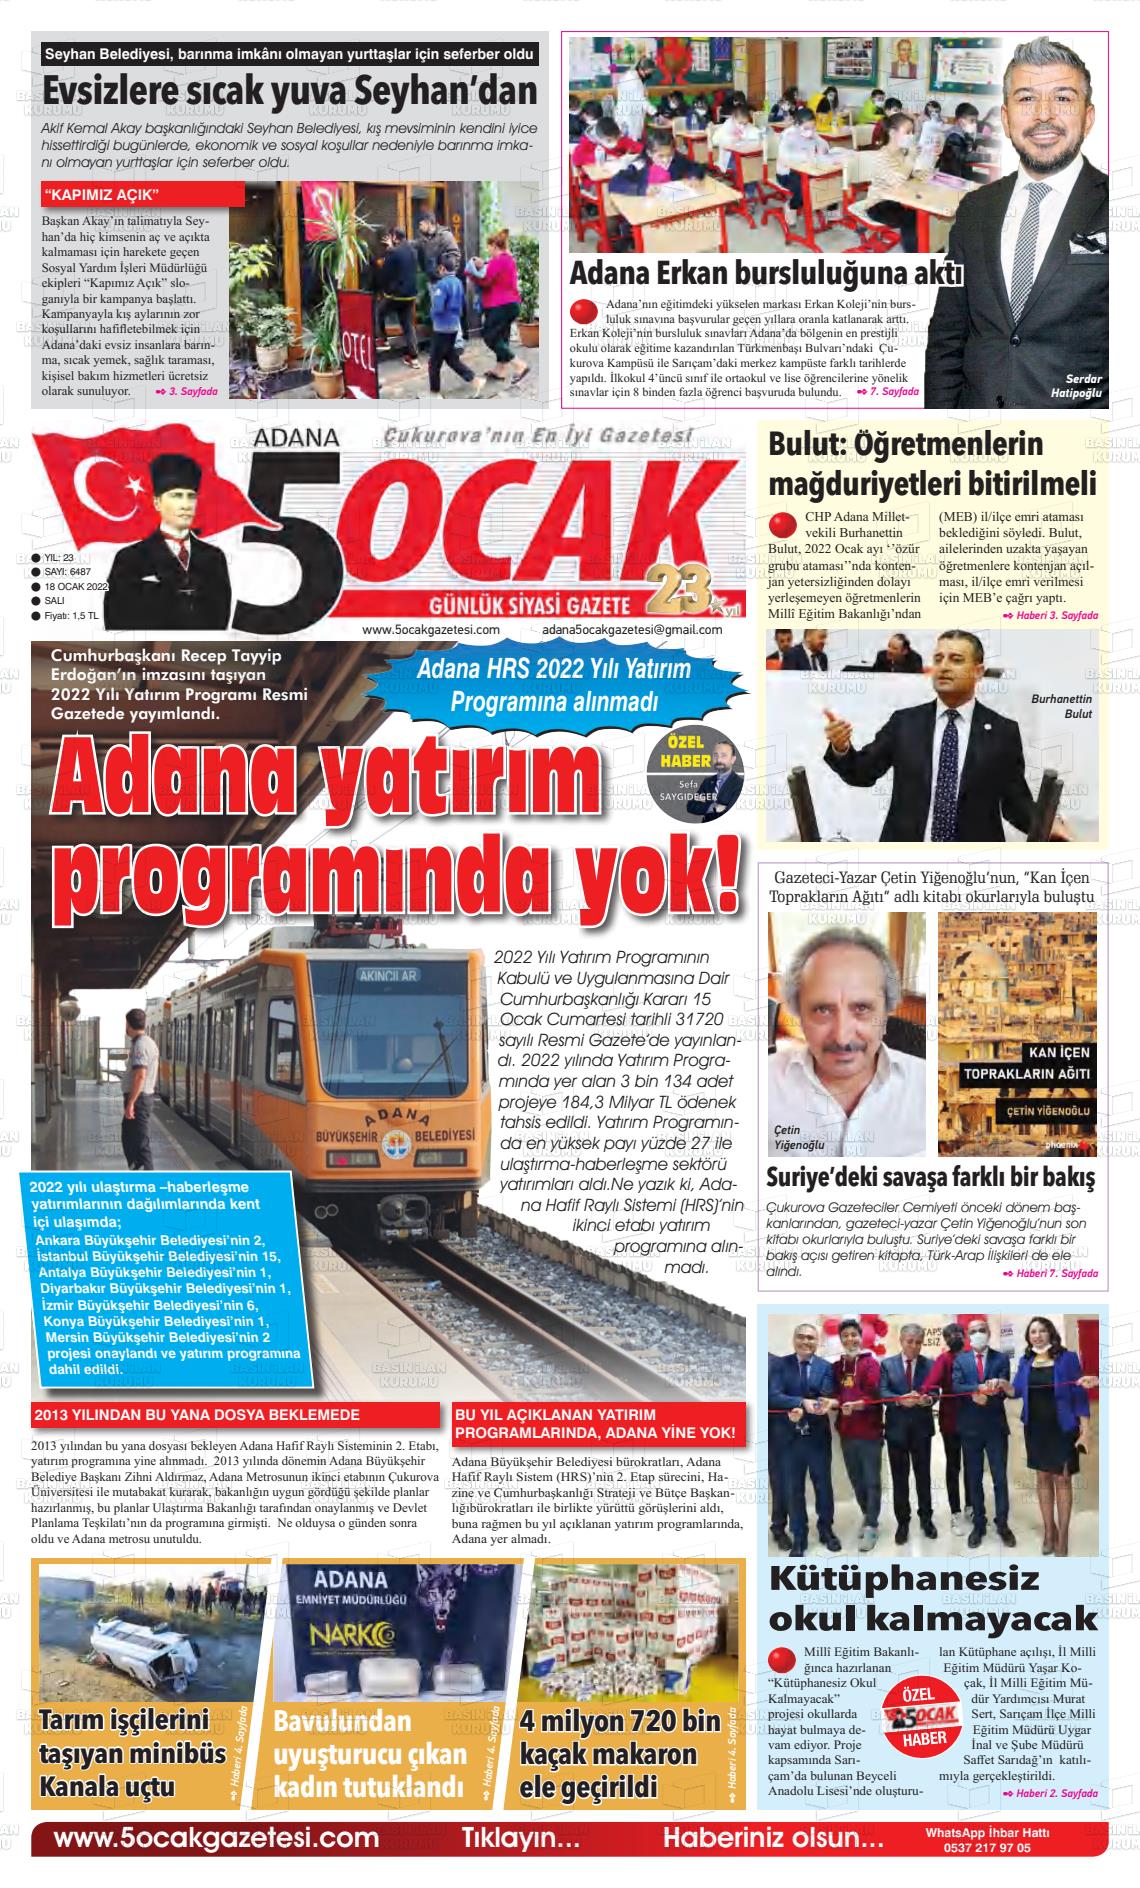 18 Ocak 2022 Adana 5 Ocak Gazete Manşeti